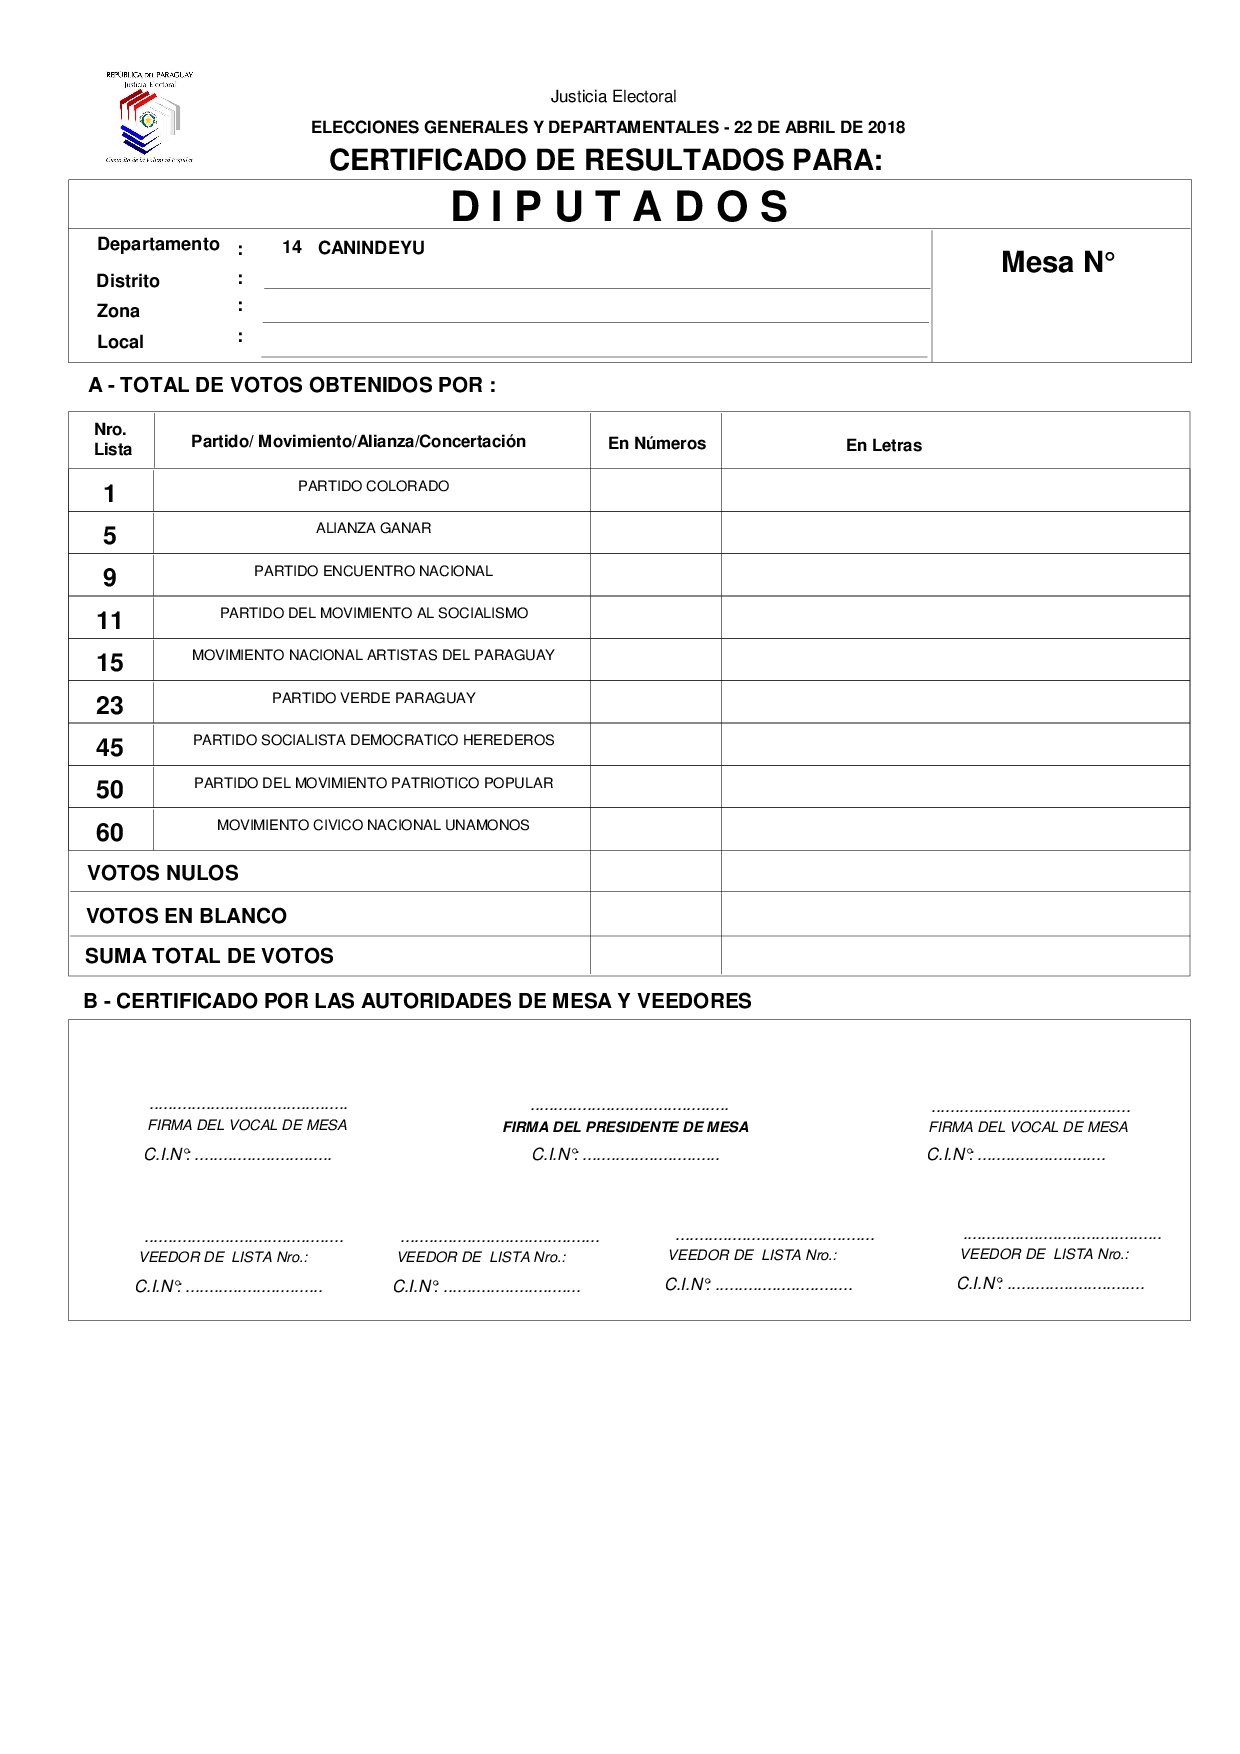 Certificado de Resultados Para Diputados de CANINDEYU